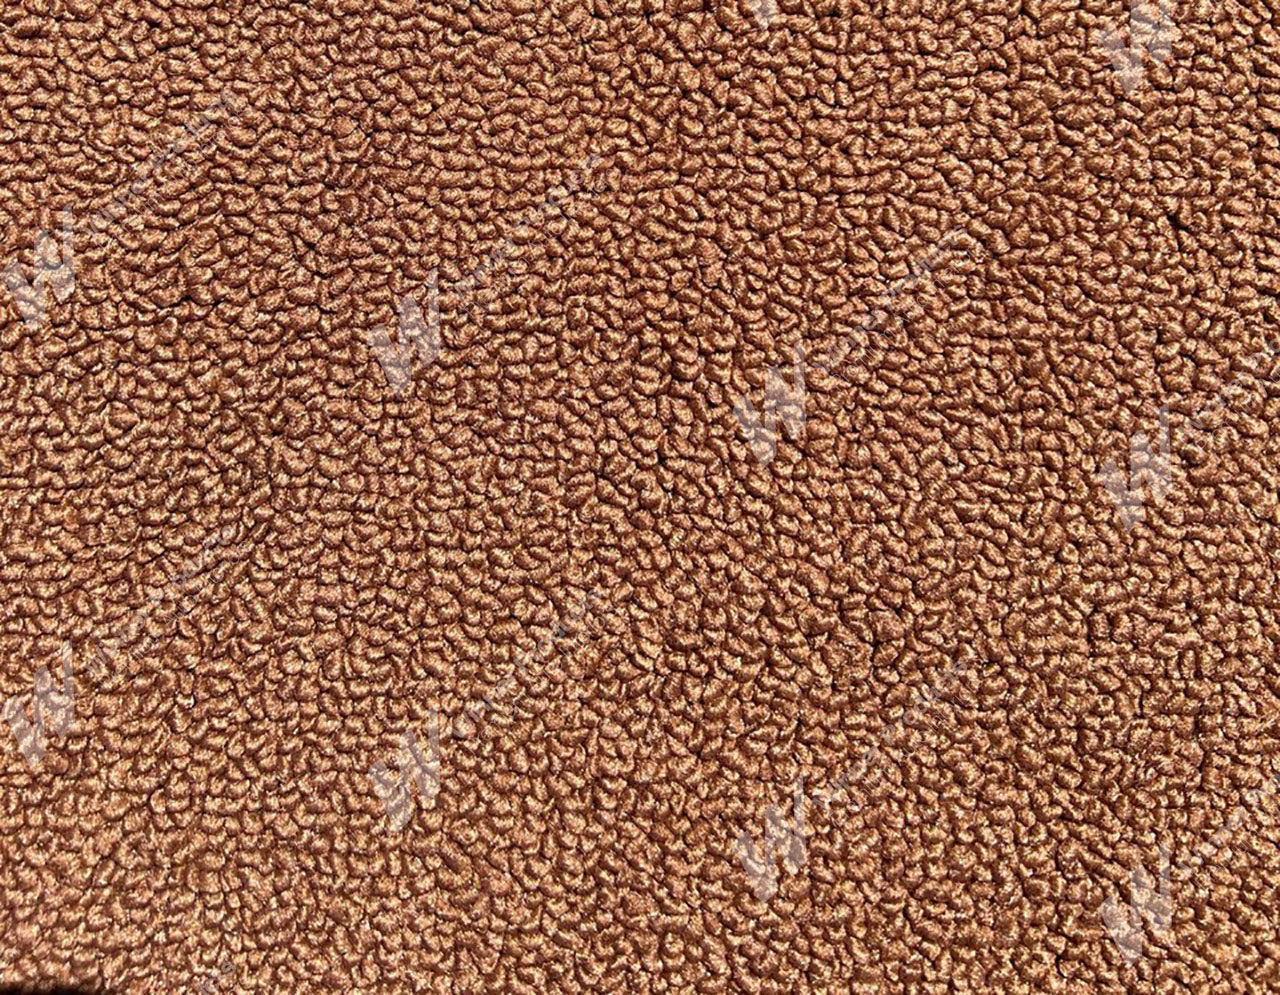 Ford Falcon 500 XB 500 Sedan P Parchment Carpet (Image 1 of 1)